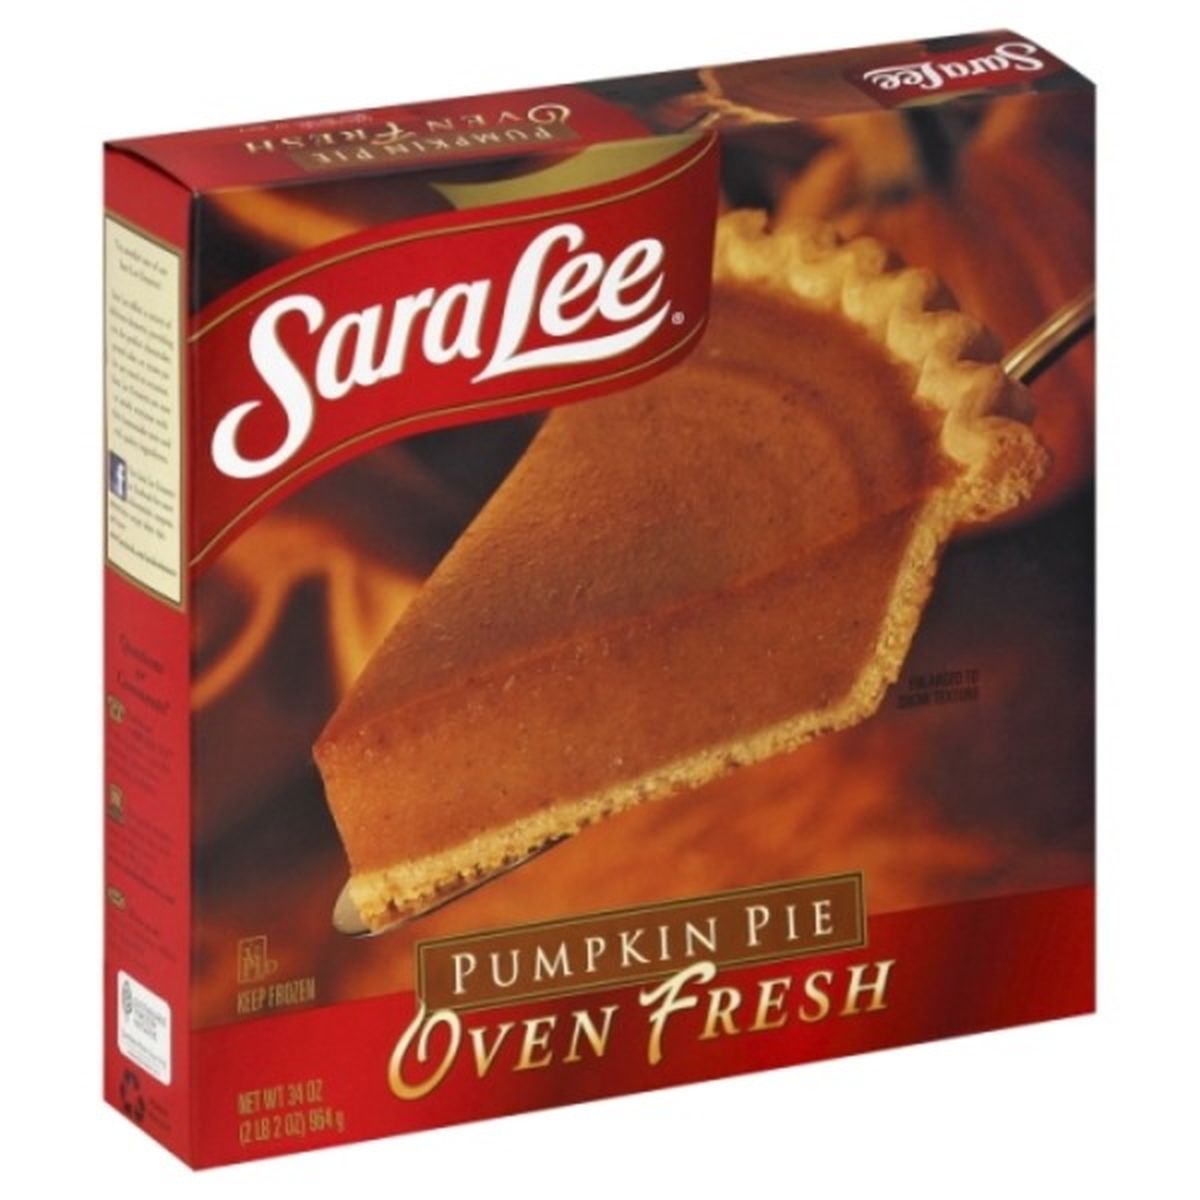 Calories in Sara Lee Oven Fresh Pie, Pumpkin